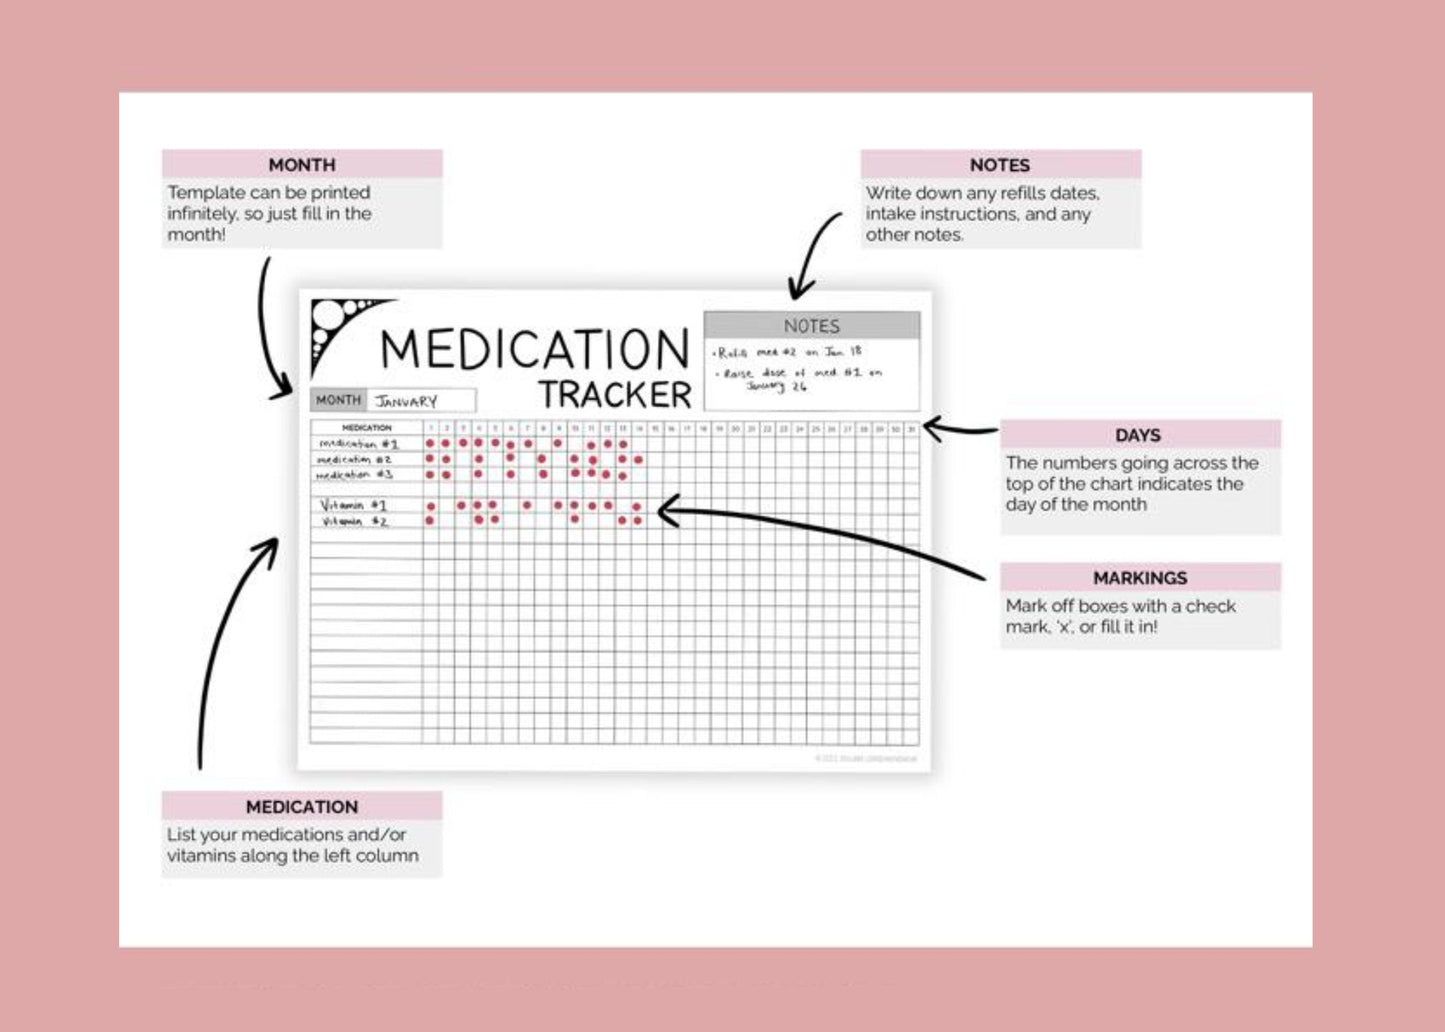 Medication & Vitamin Tracker | Printable PDF